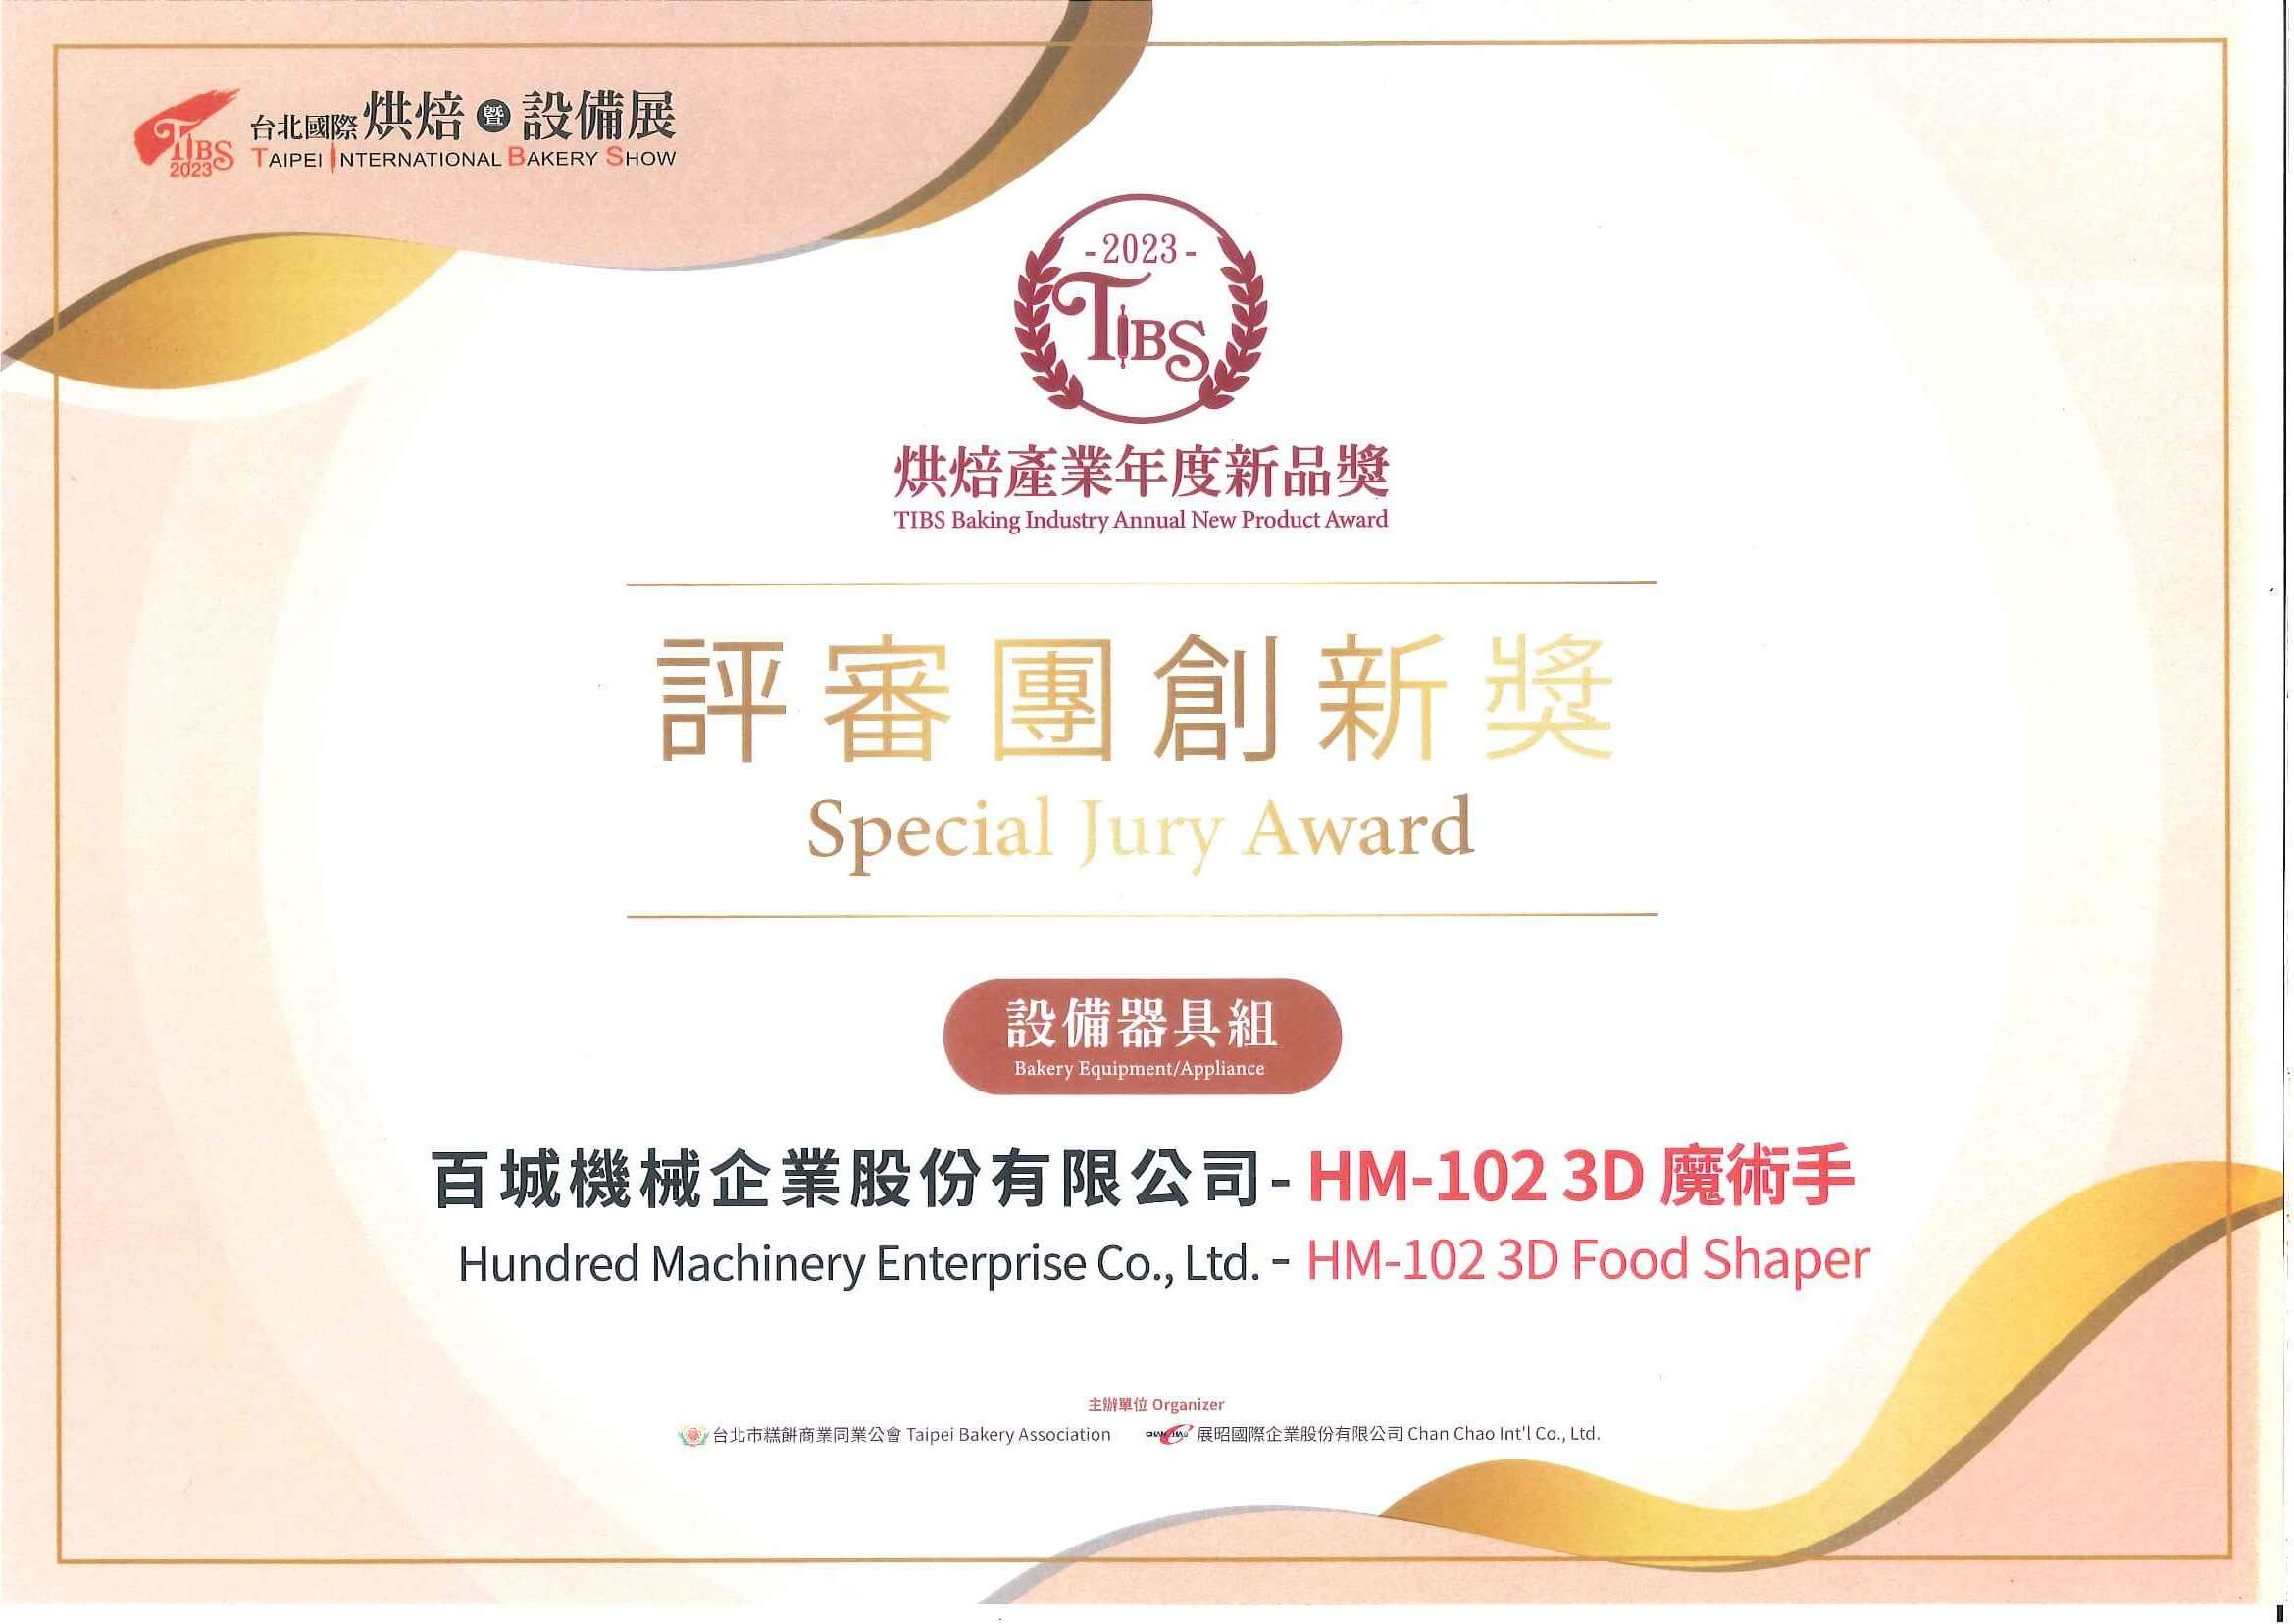 2023 TIBS Baking Industry Annual New Product Award Special Jury Award